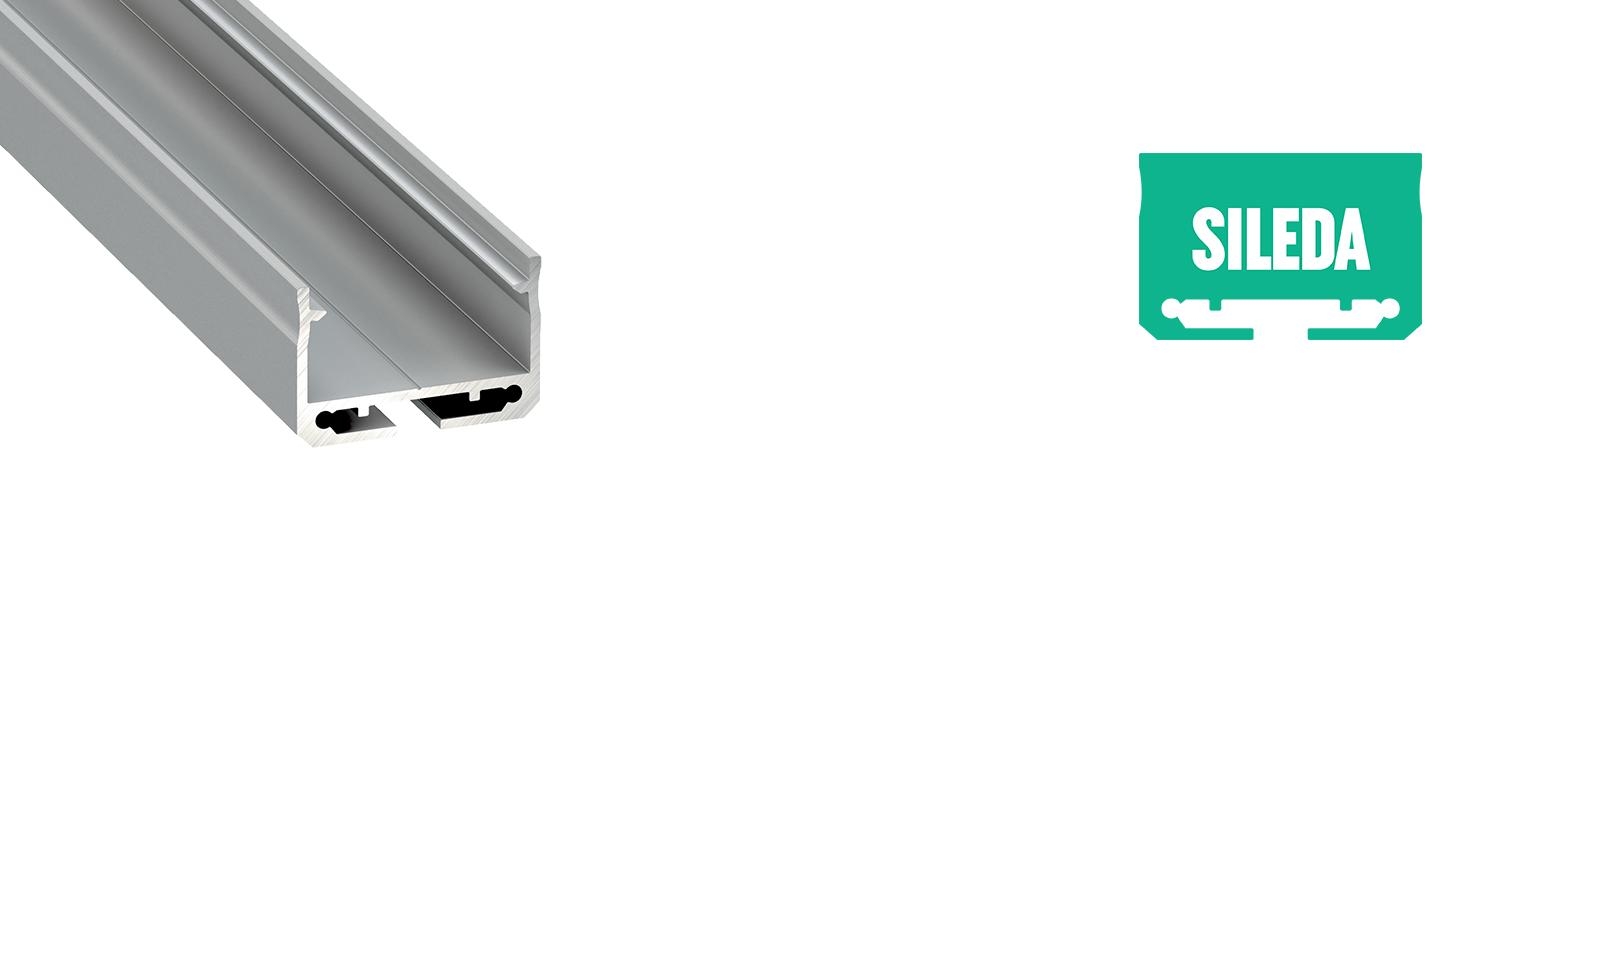 LUMINES "SILEDA" surface mounted profile